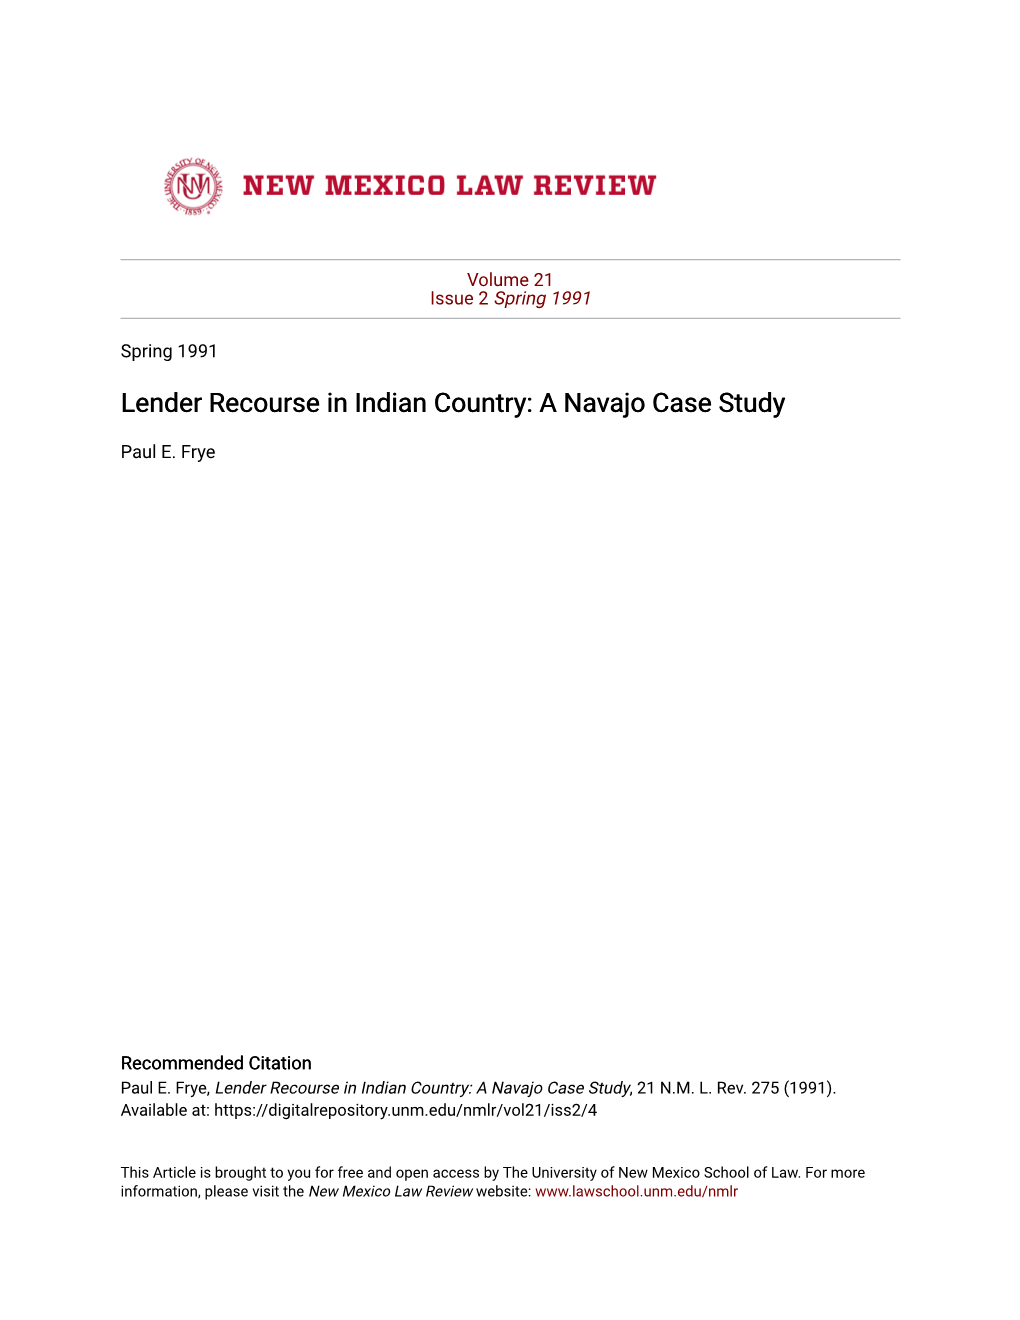 A Navajo Case Study